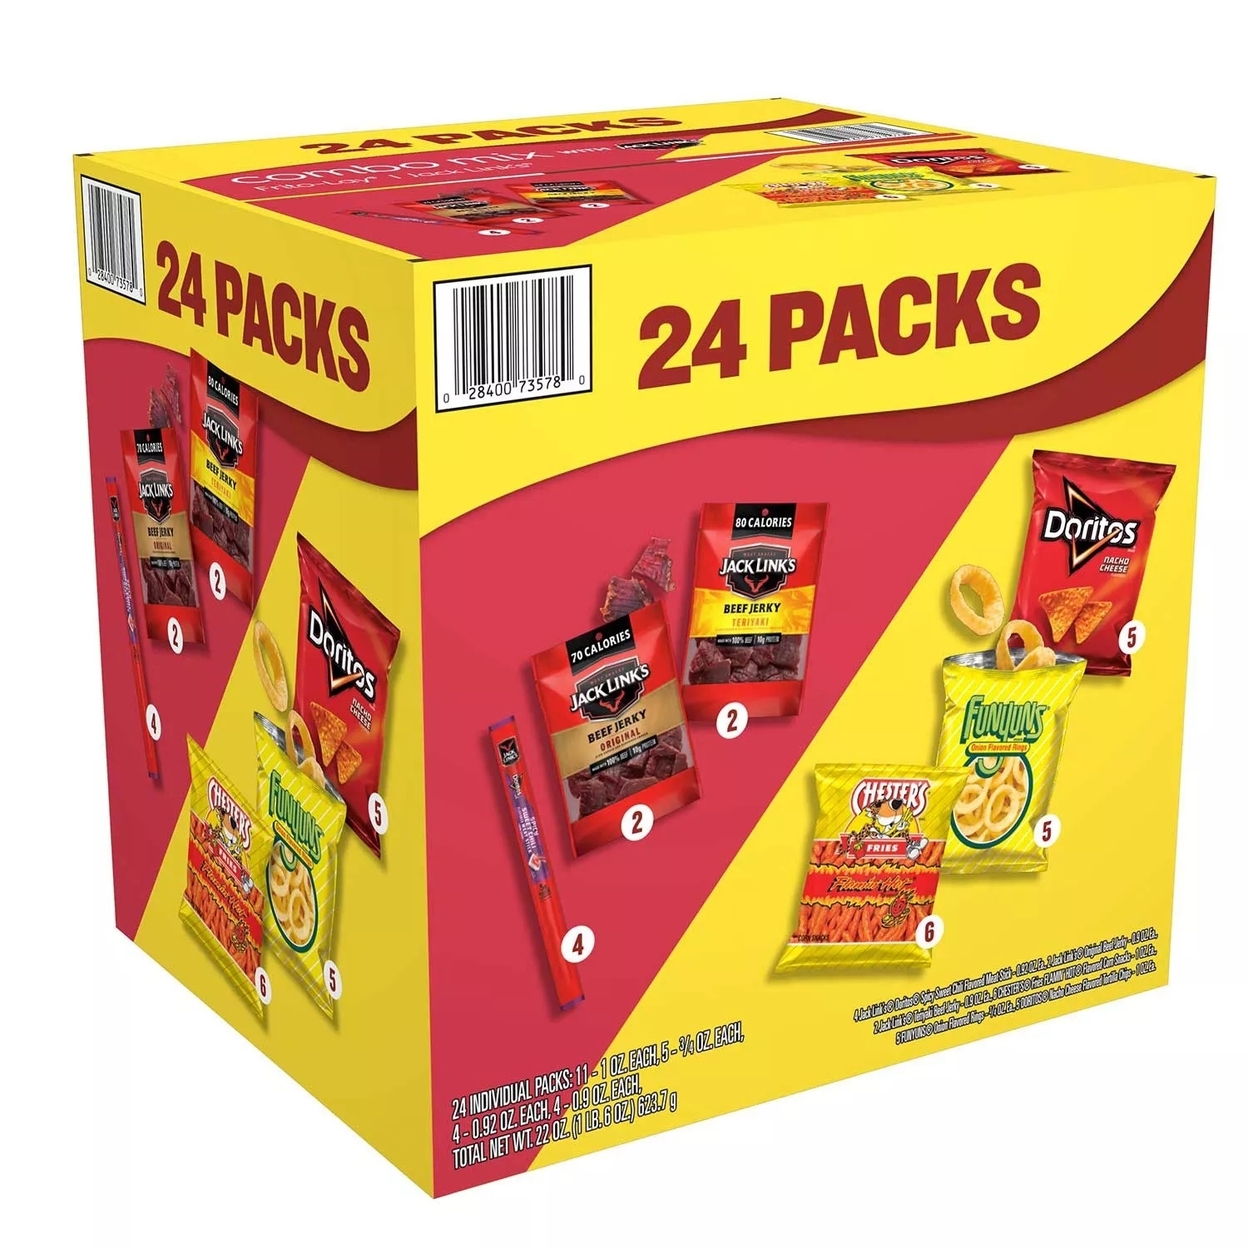 Frito Lay Snacks Combo Mix Variety Packs, 22.03 Ounce (24 Count)